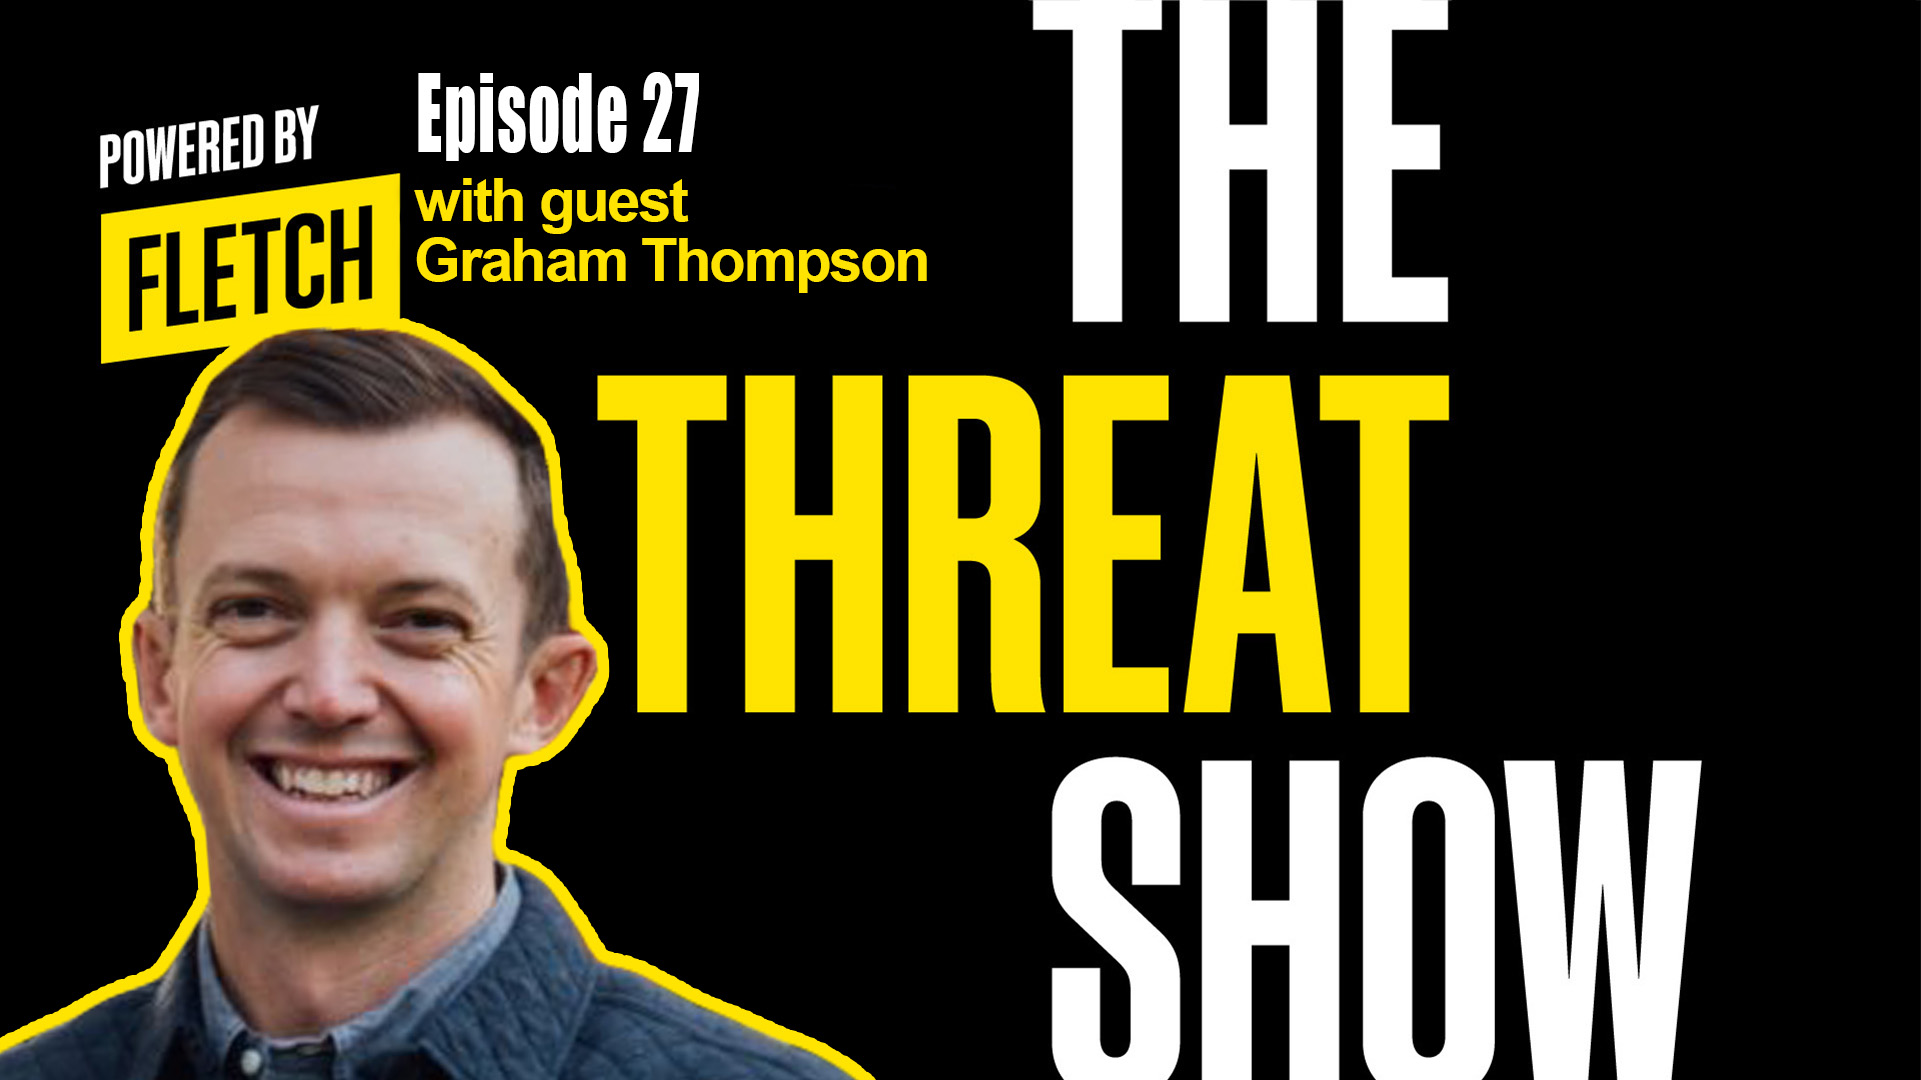 The Threat Show Ep. 27 w/ Graham Thompson